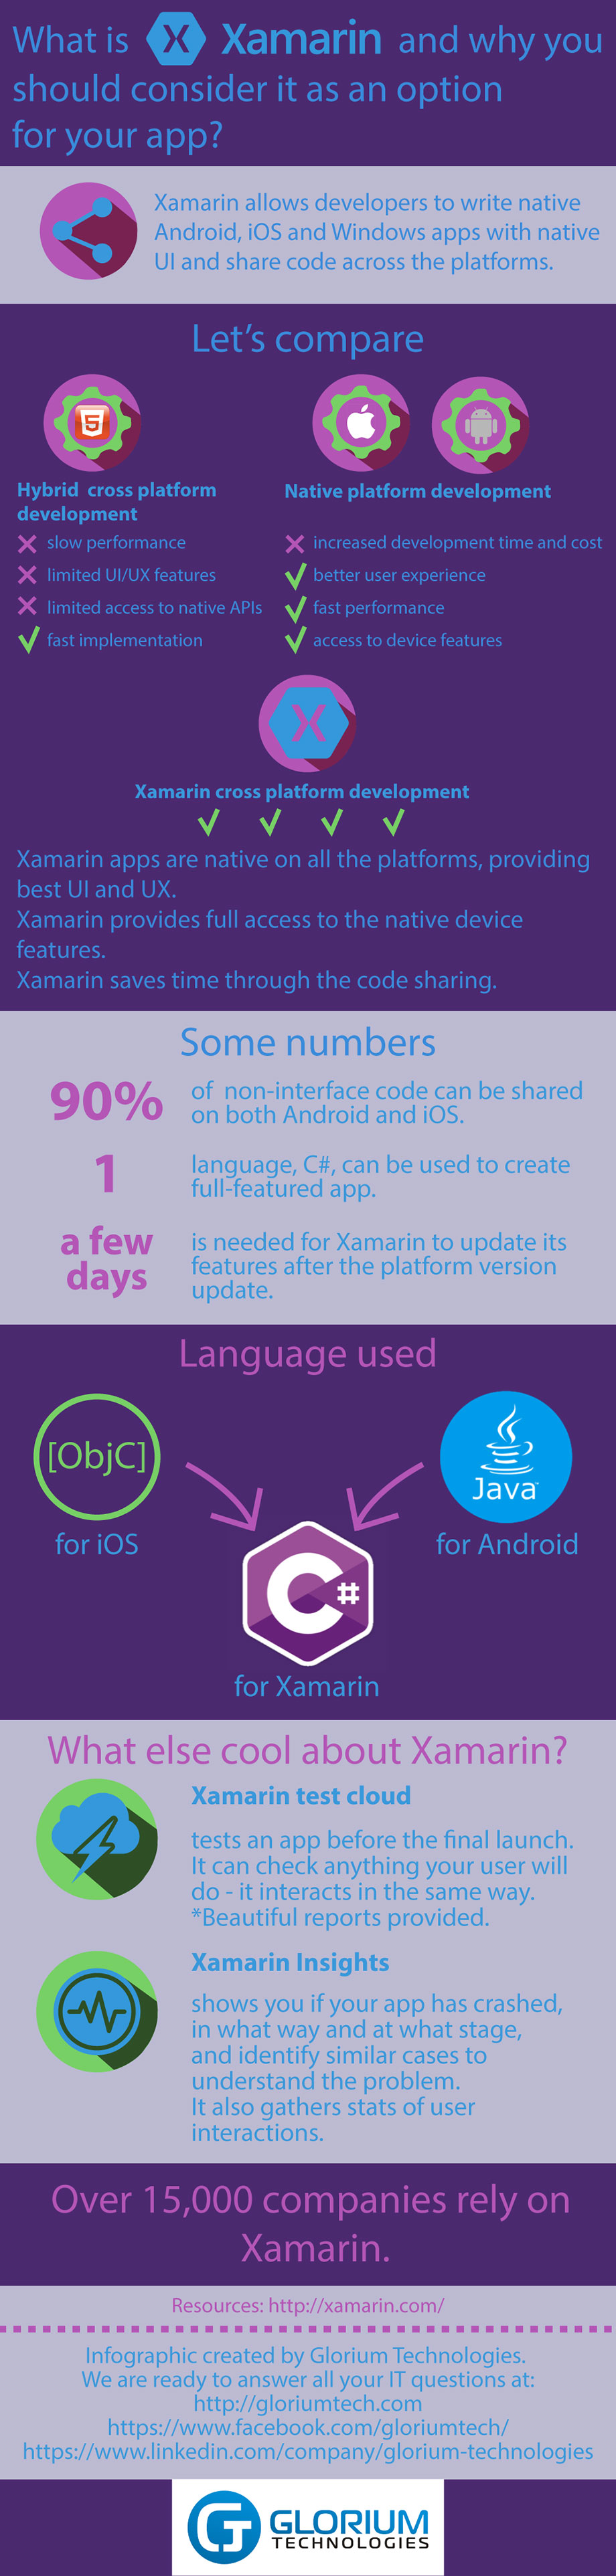 Xamarin Development: A Great Option for Mobile App Development (Infographic)